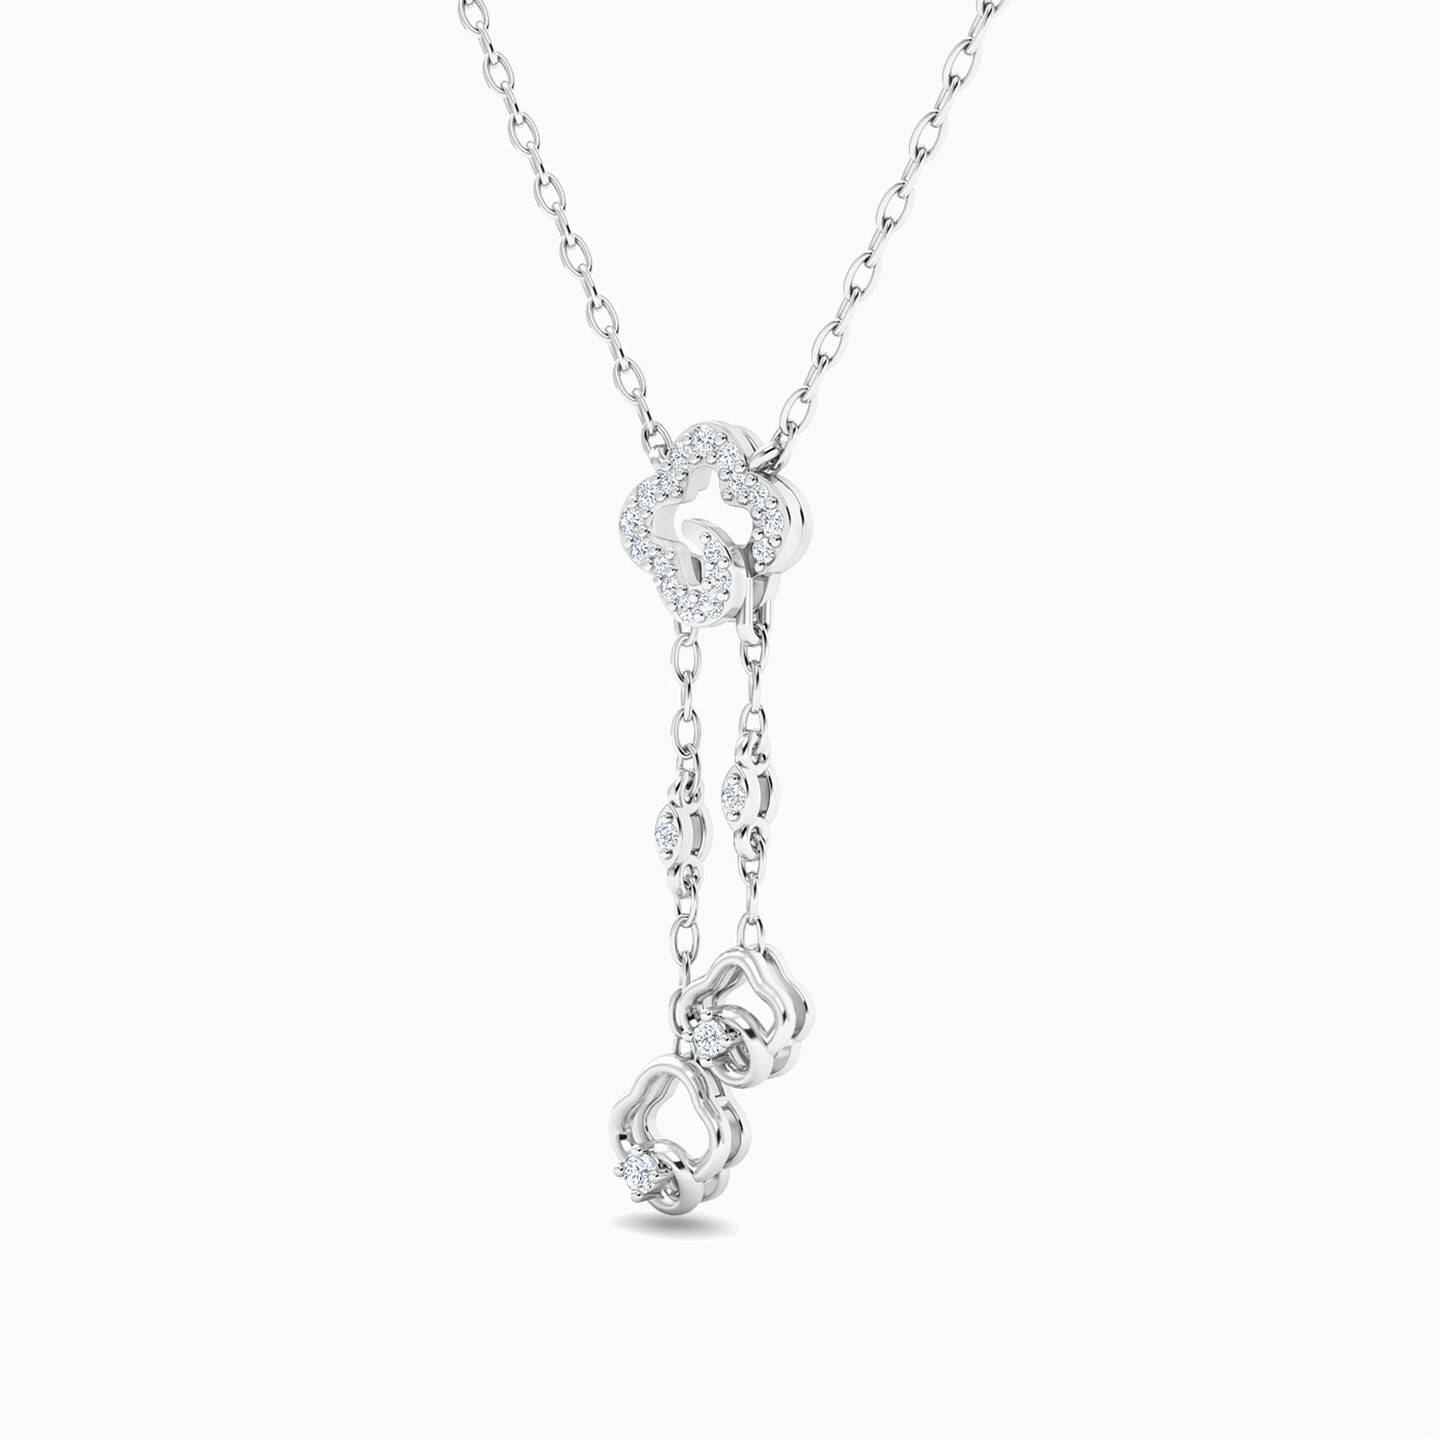 18K Gold Diamond Drop Pendant Necklace - 2